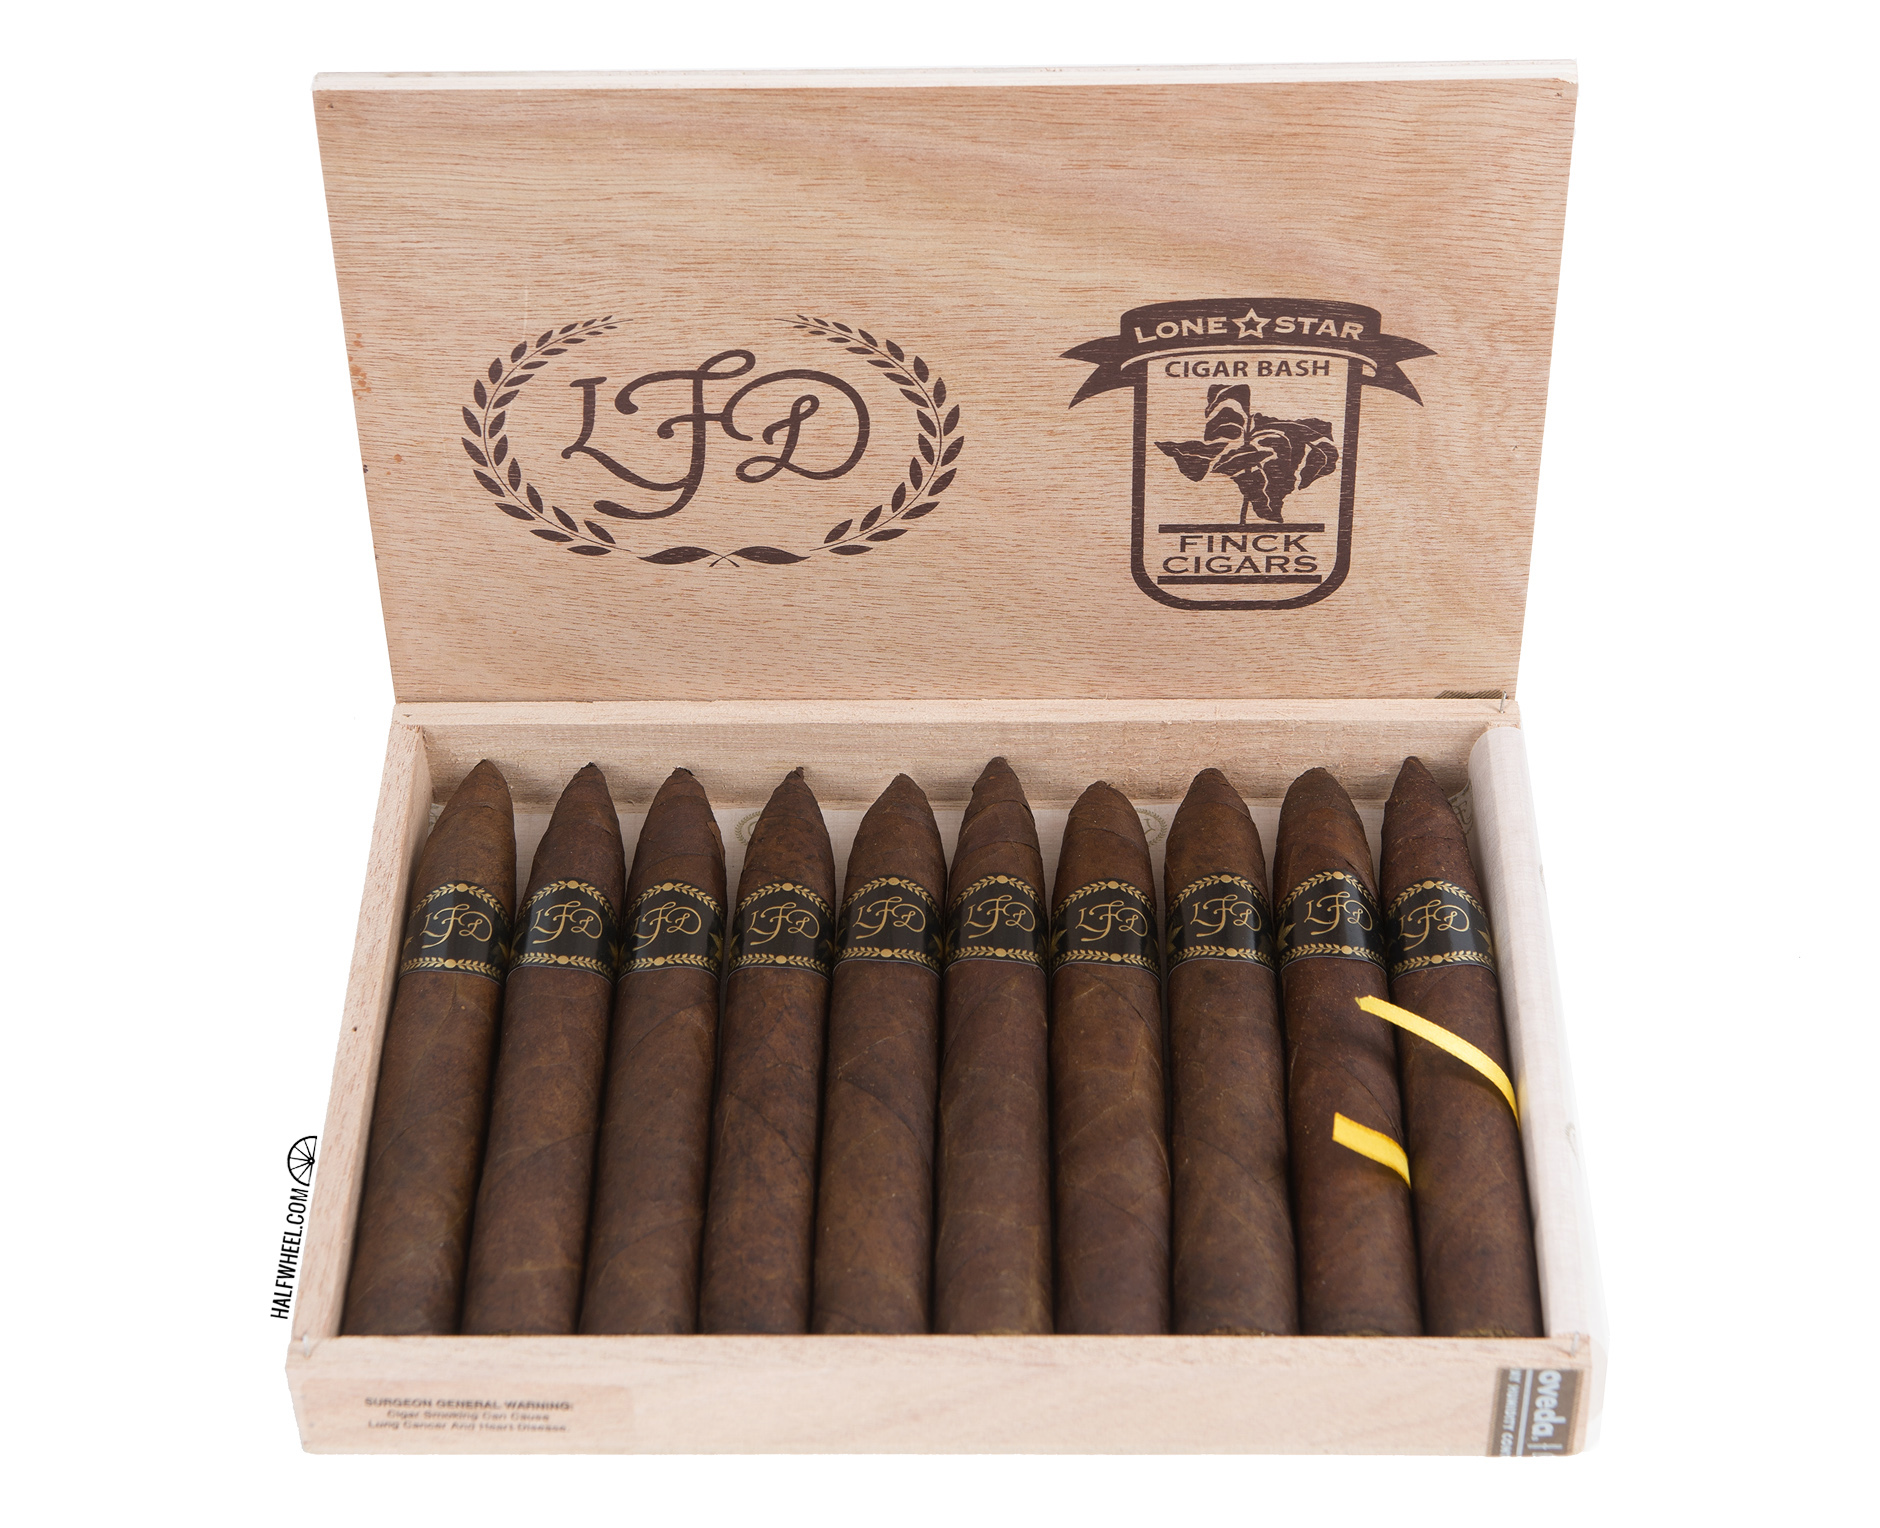 la-flor-dominicana-lone-star-cigar-bash-exclusive-2016-box-3